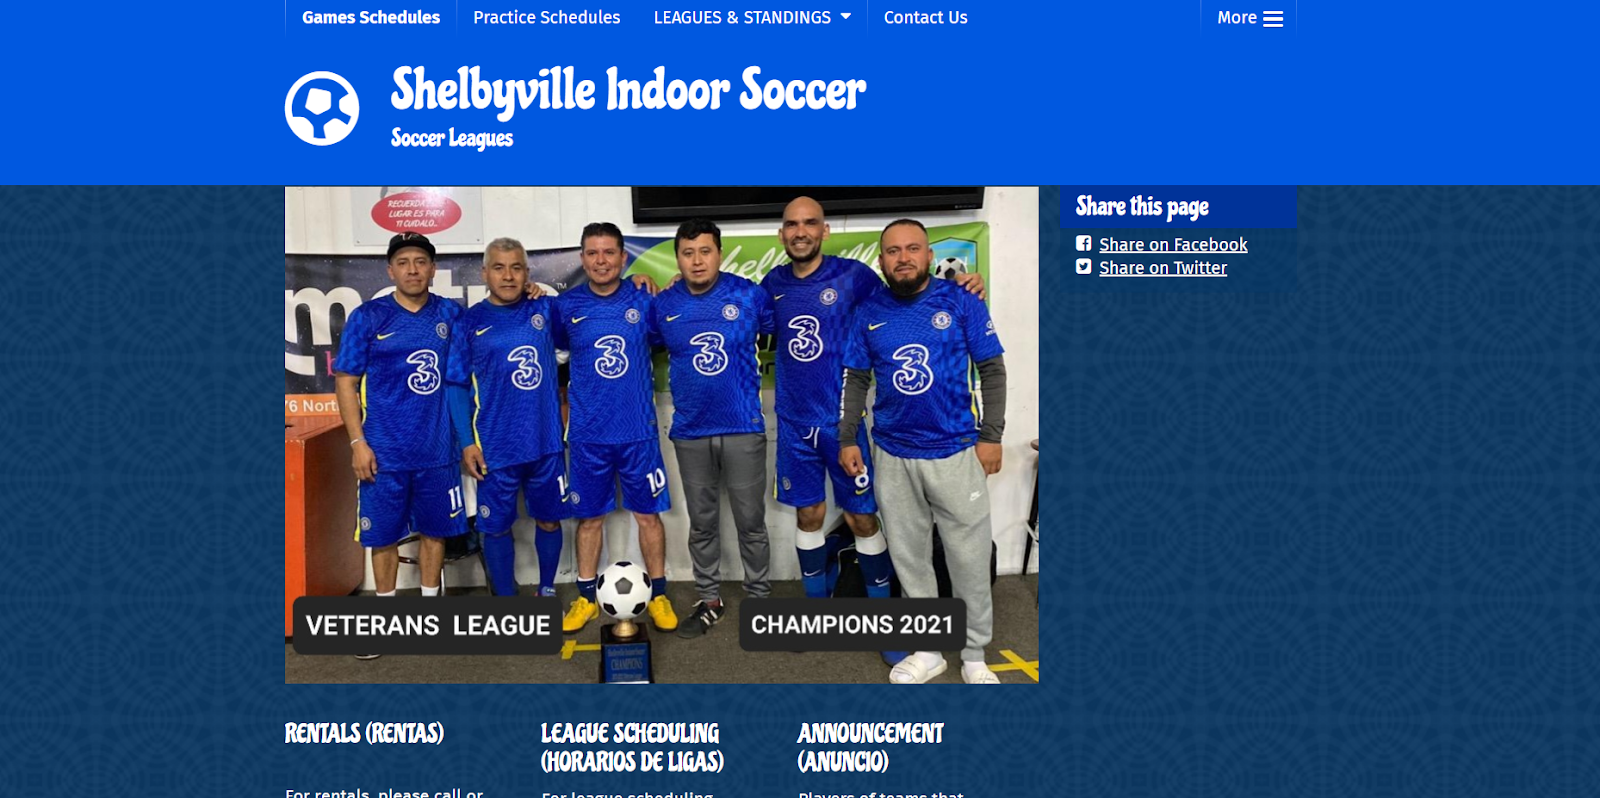 Shelbyville Indoor Soccer Club